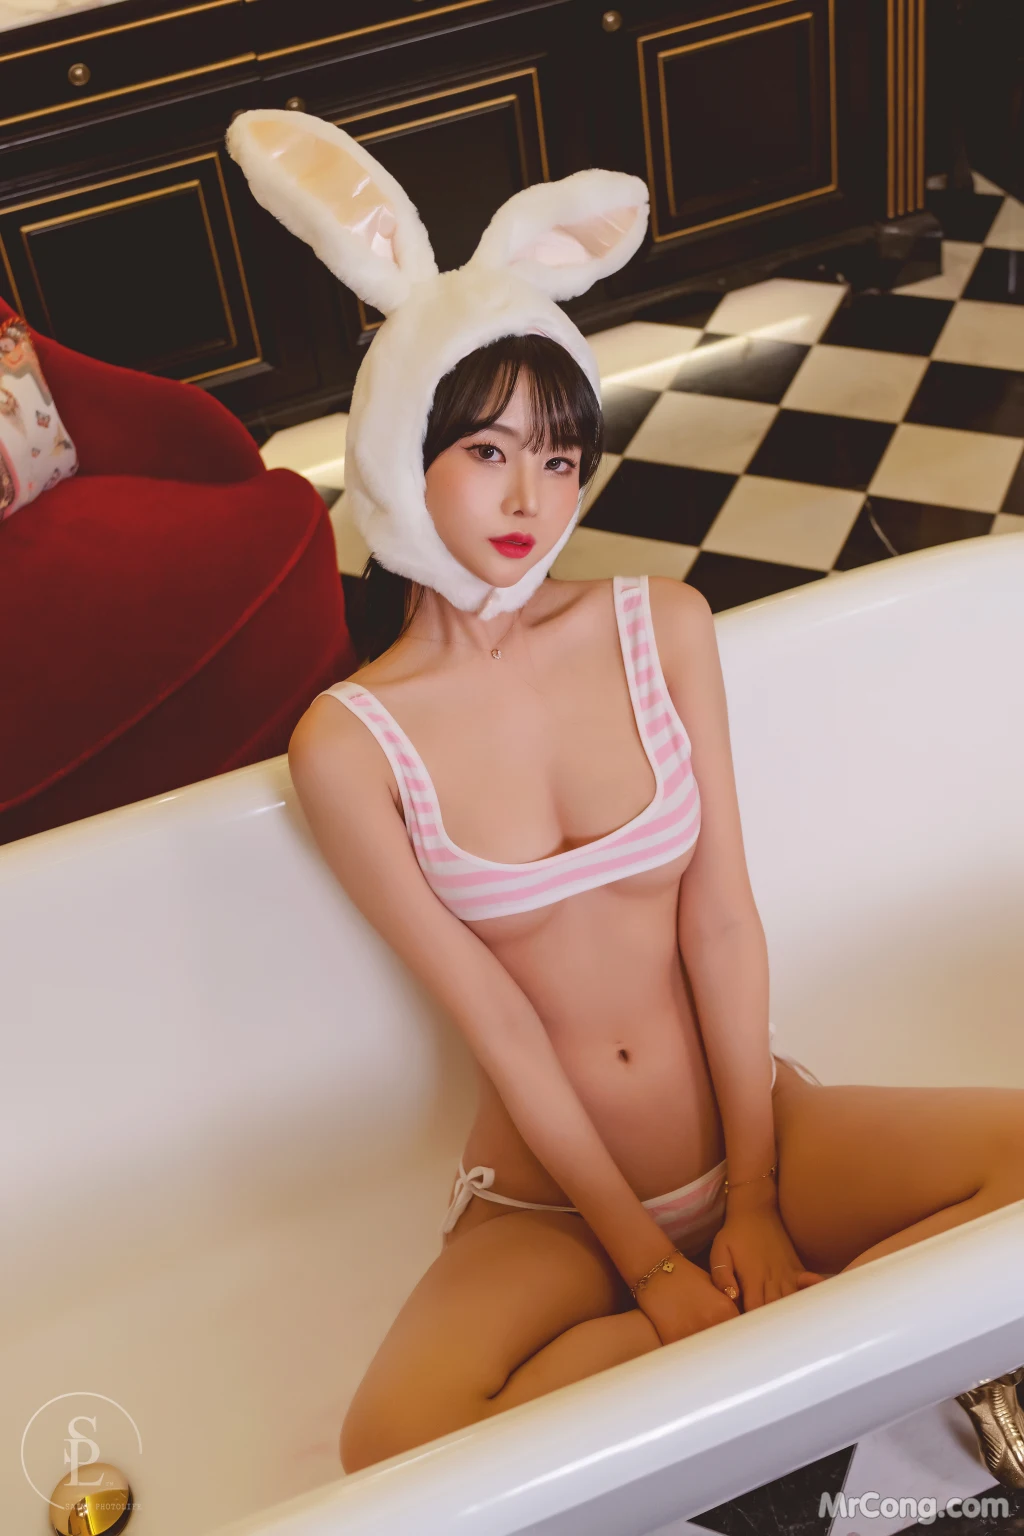 SAINT Photolife - Yuna (유나): No.38 Yuna's Wonderland (66 photos)